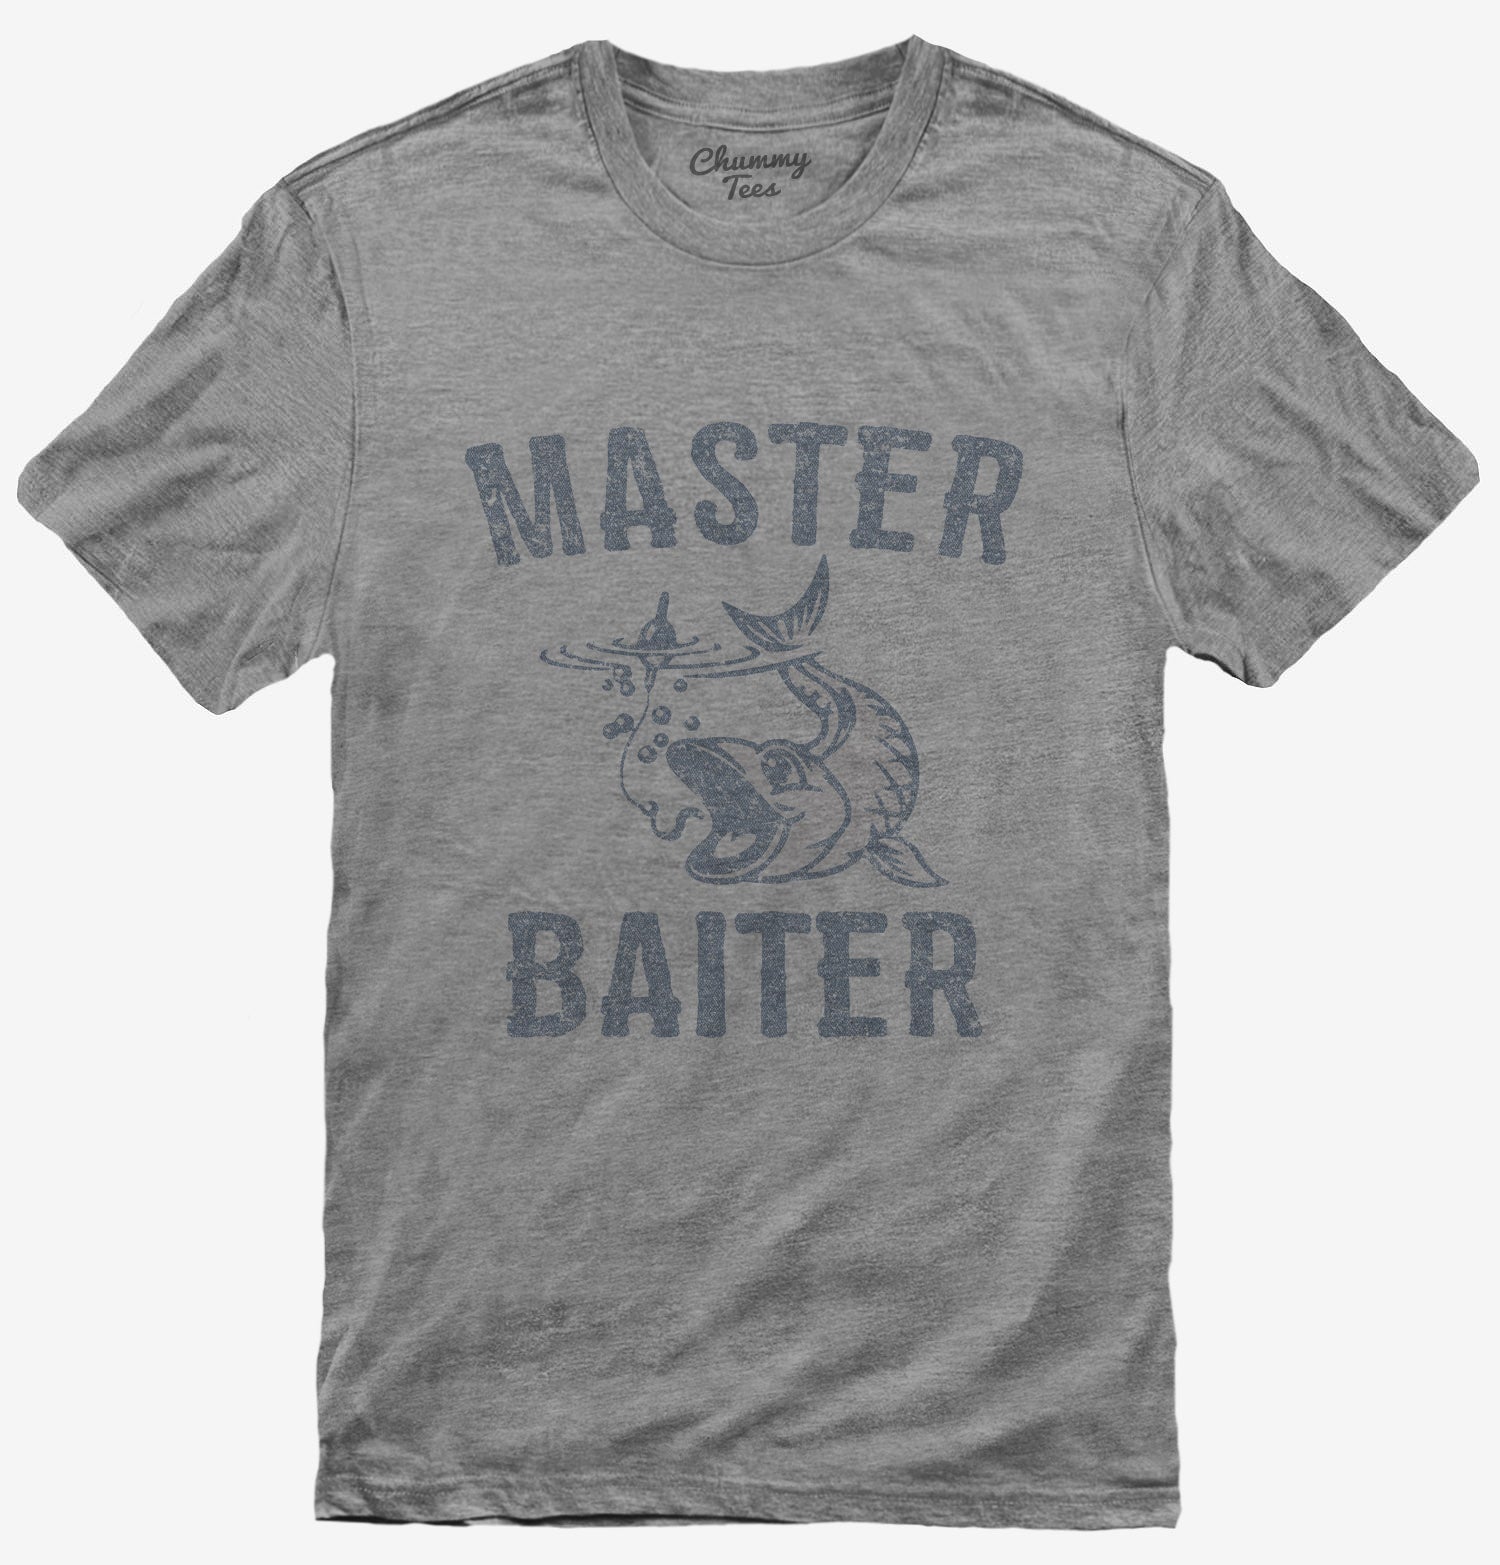 Master Baiter Tee - Funny Fishing Shirt L